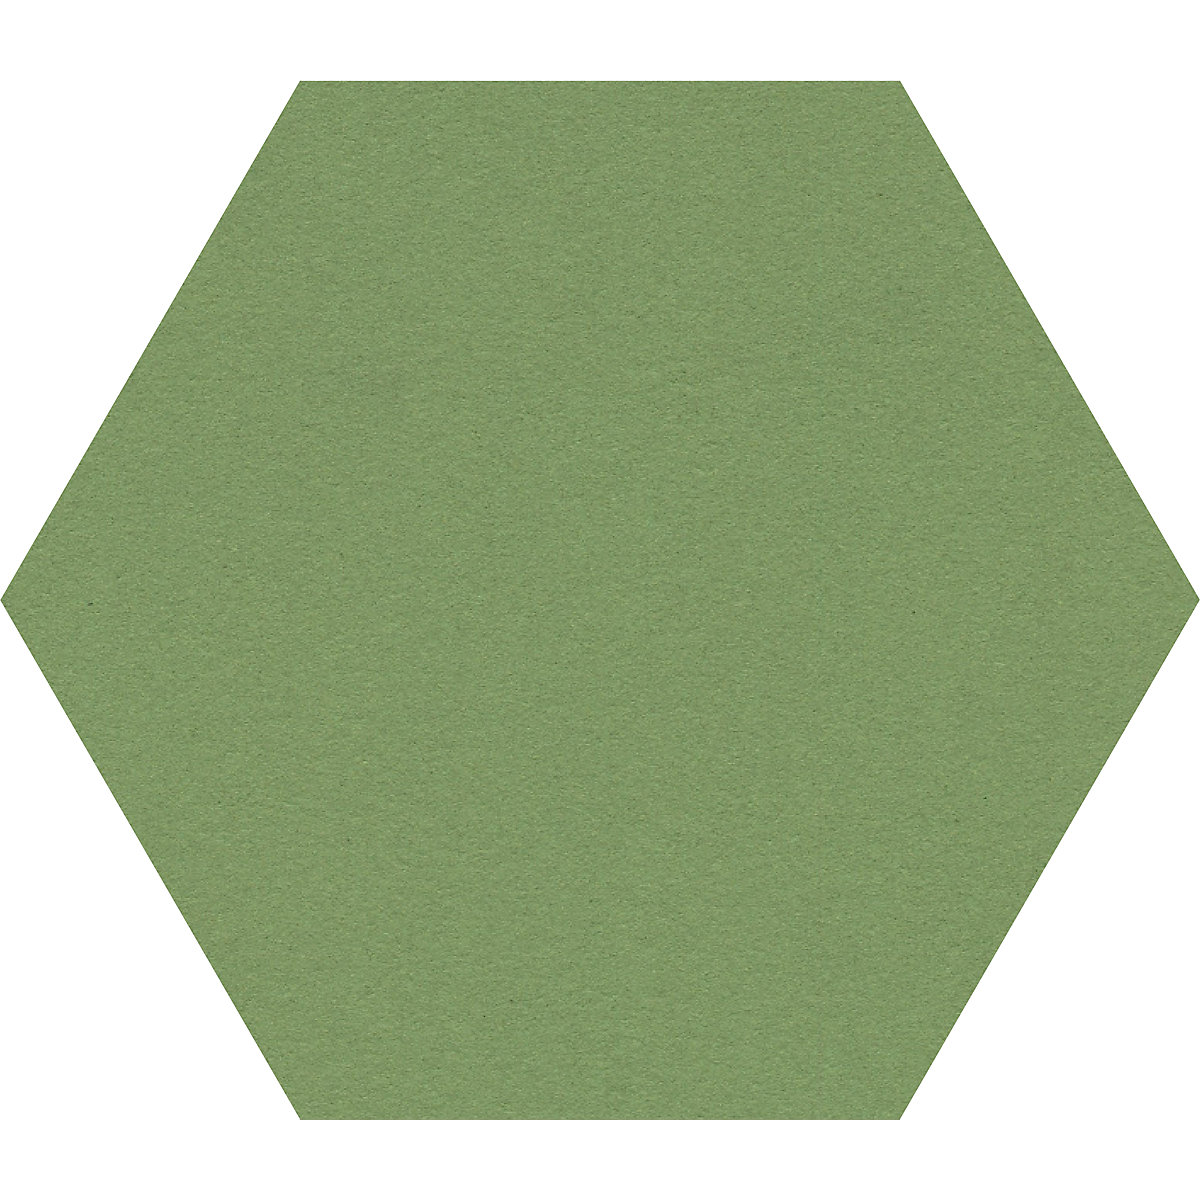 Hexagonal designer pin board – Chameleon, cork, WxH 600 x 600 mm, green-34